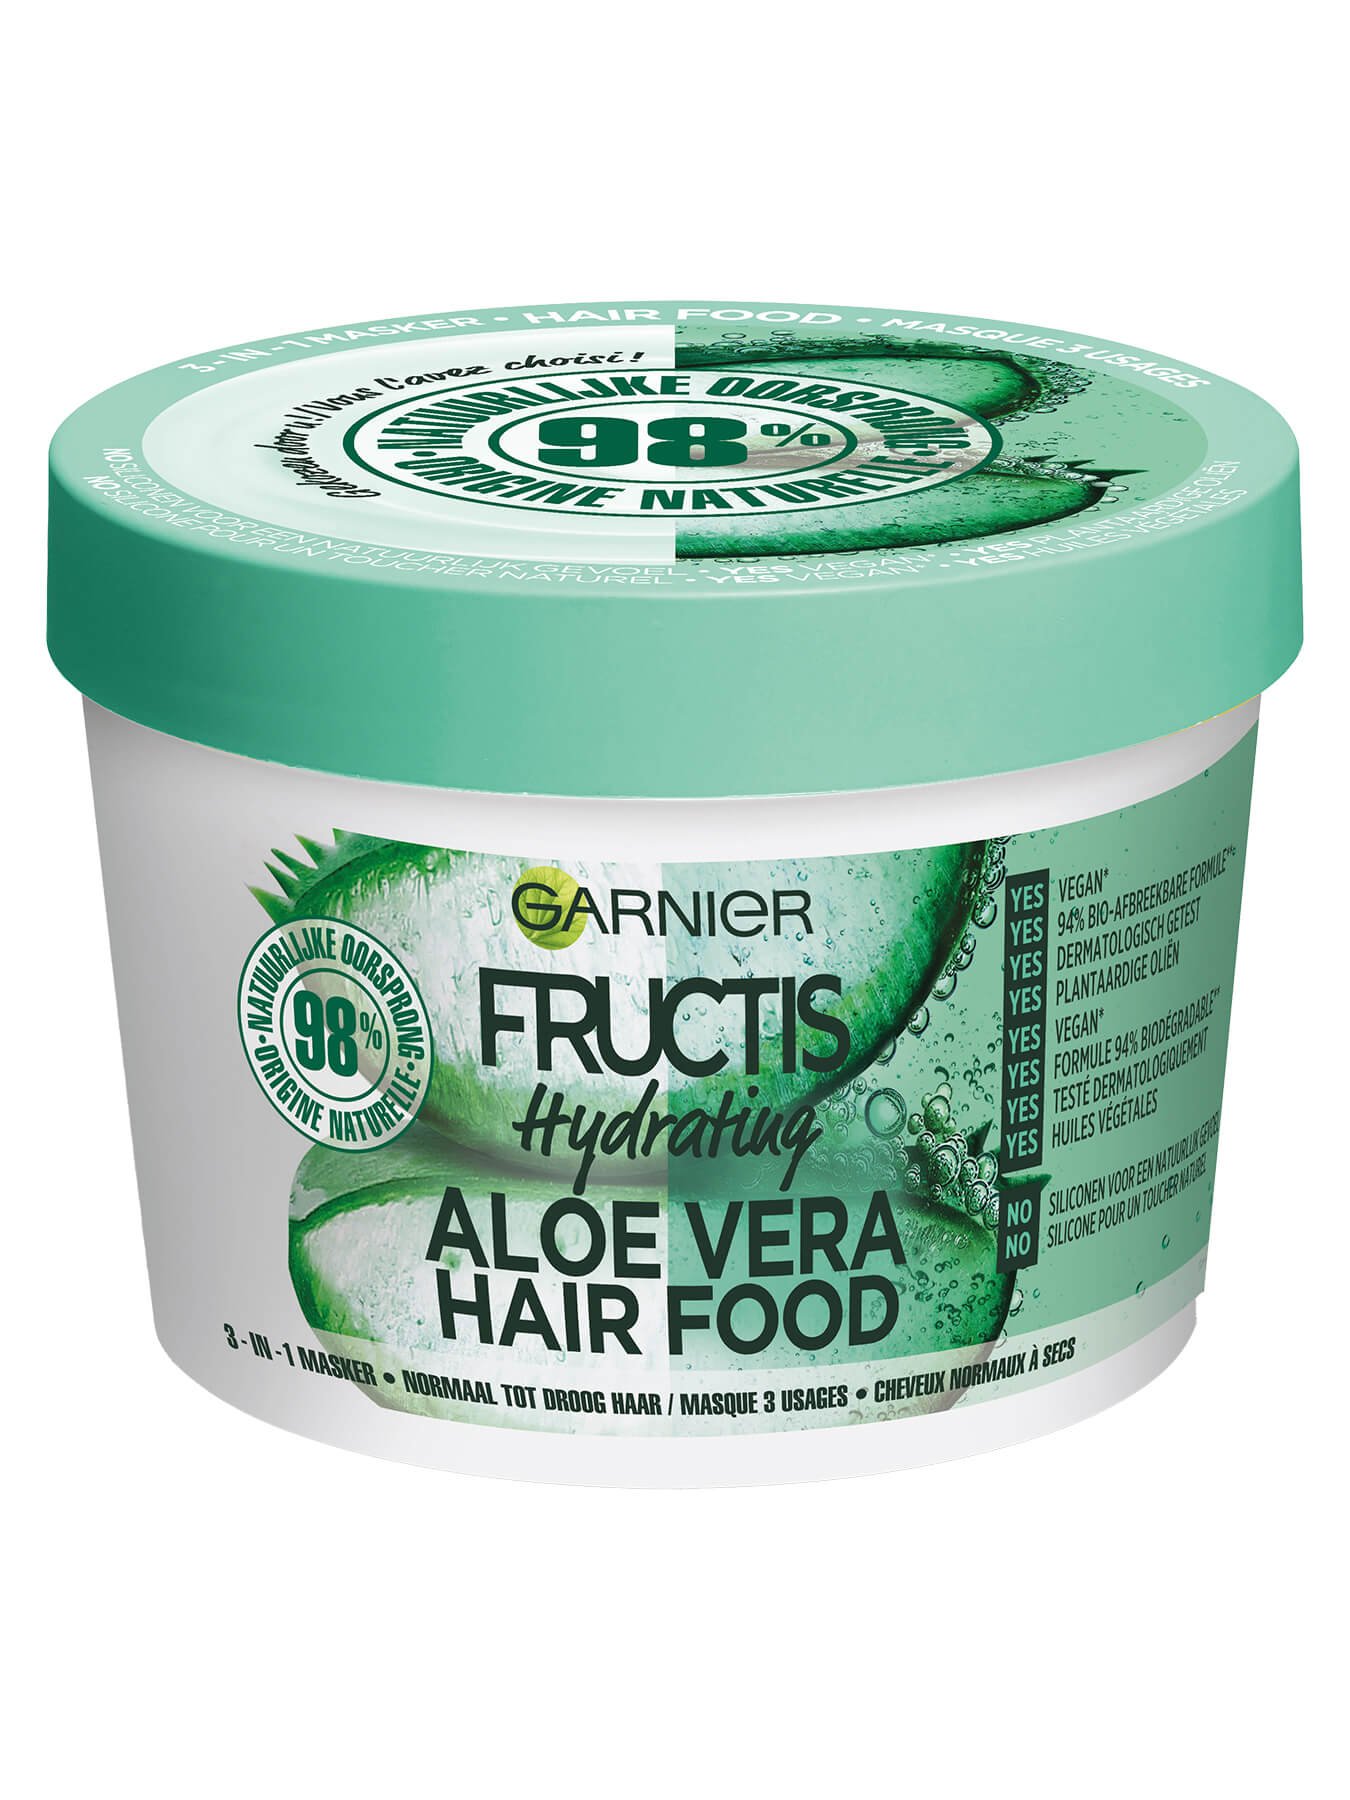 Fructis Hair Food   Aloe Vera   Mask_1350x1800px